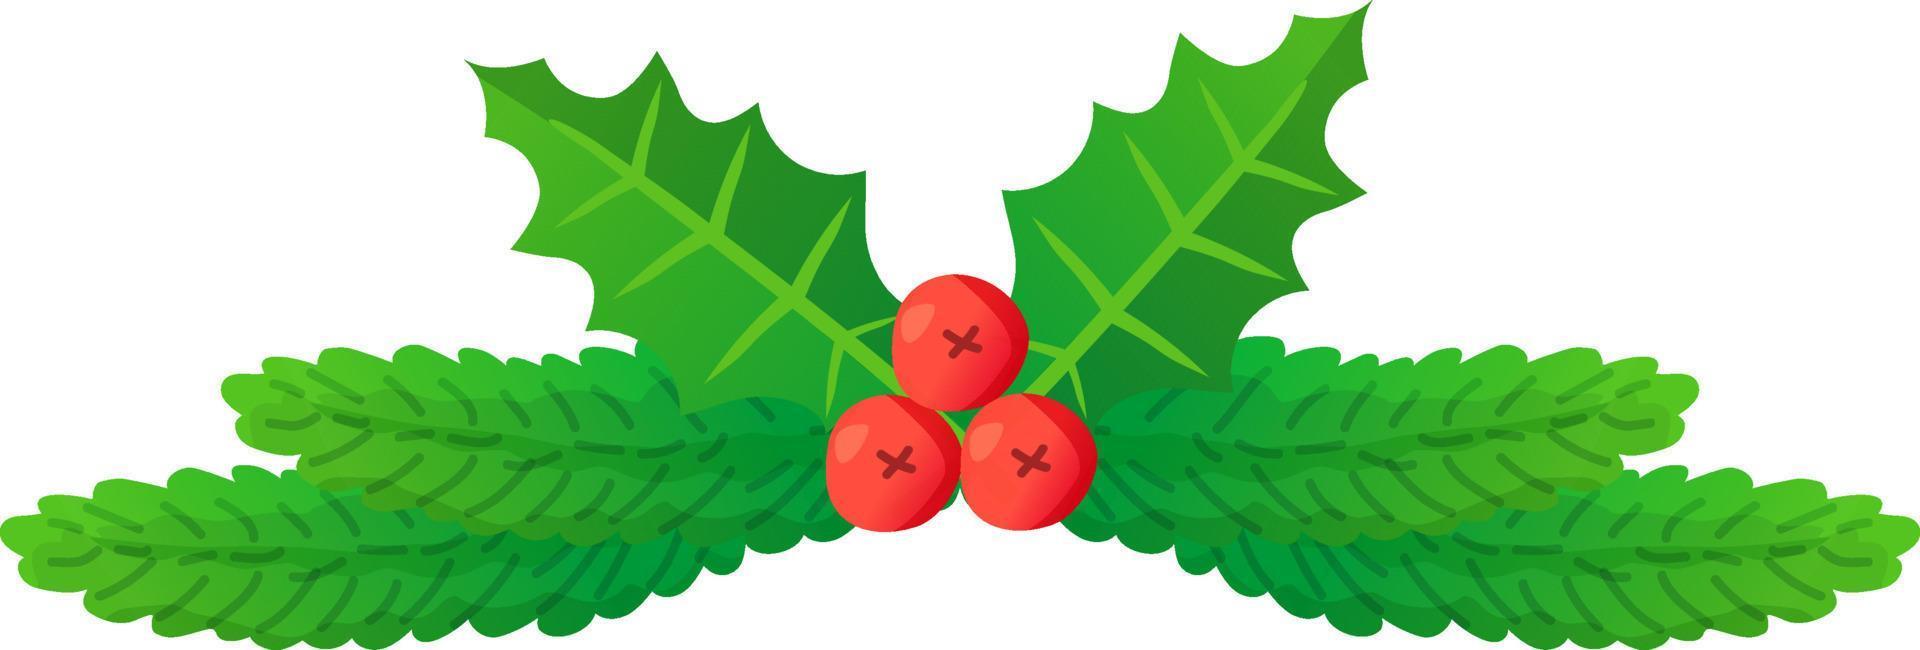 Christmas header or divider Pine branch holly fir bell flower balls vector